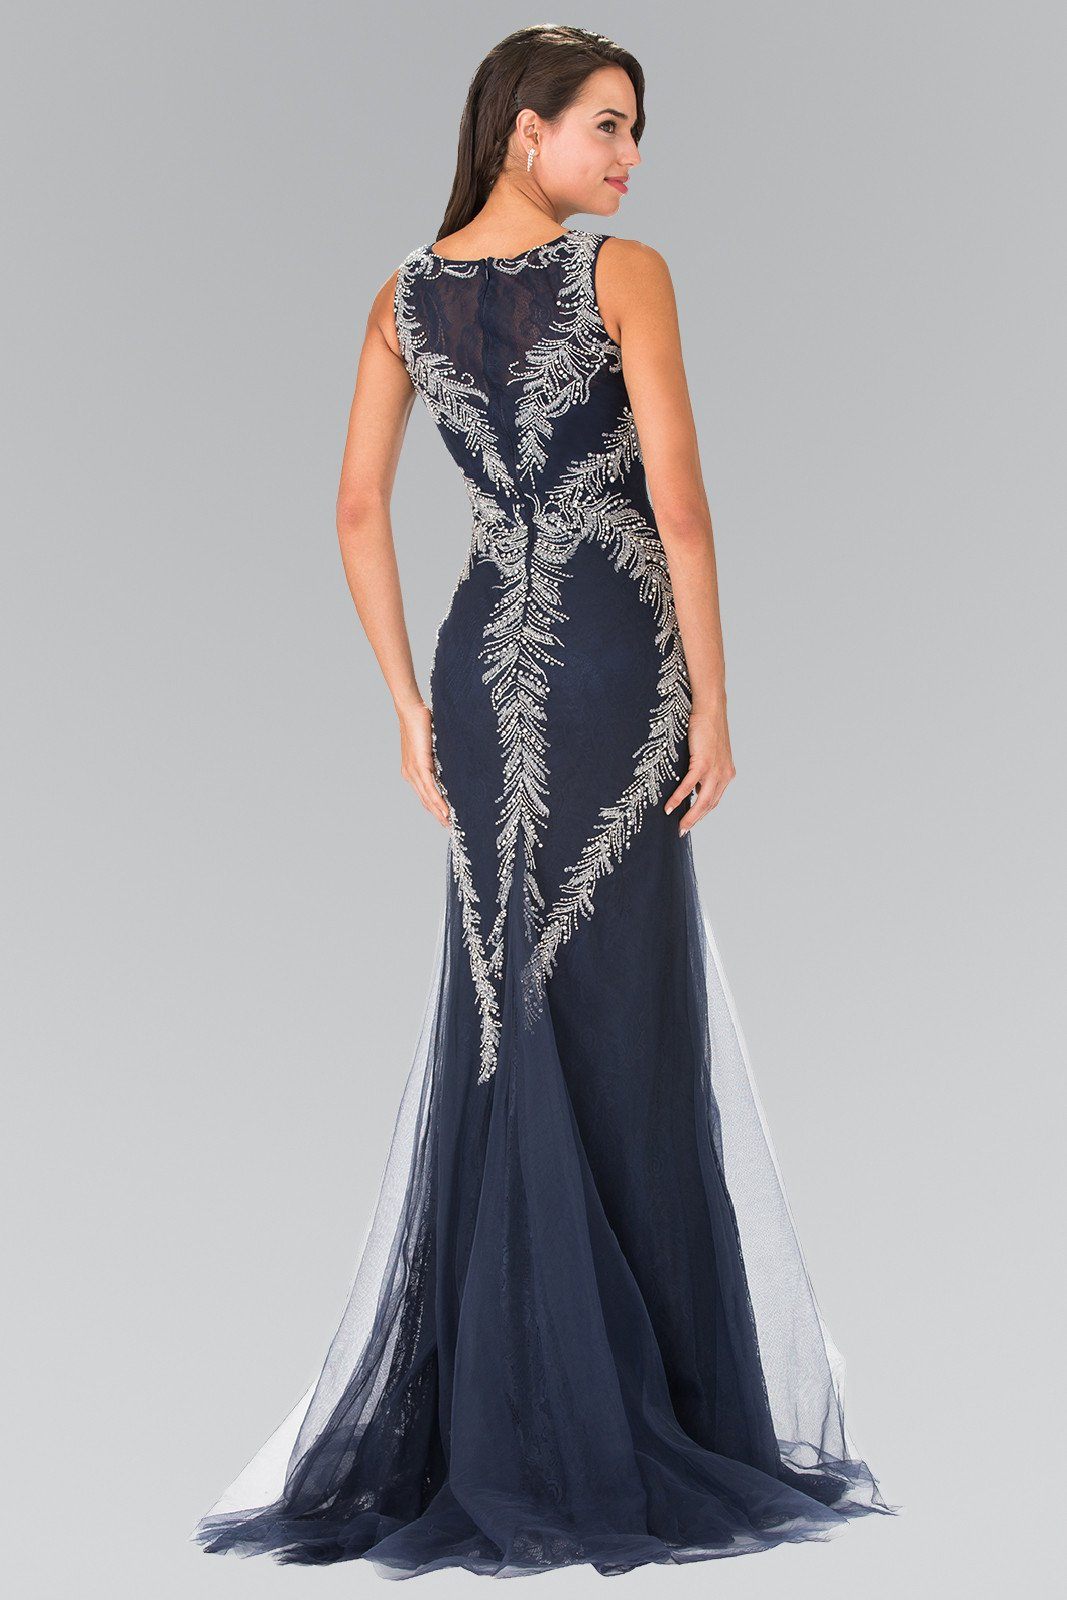 Long Sleeveless Beaded Lace Mermaid Dress by Elizabeth K GL2289-Long Formal Dresses-ABC Fashion